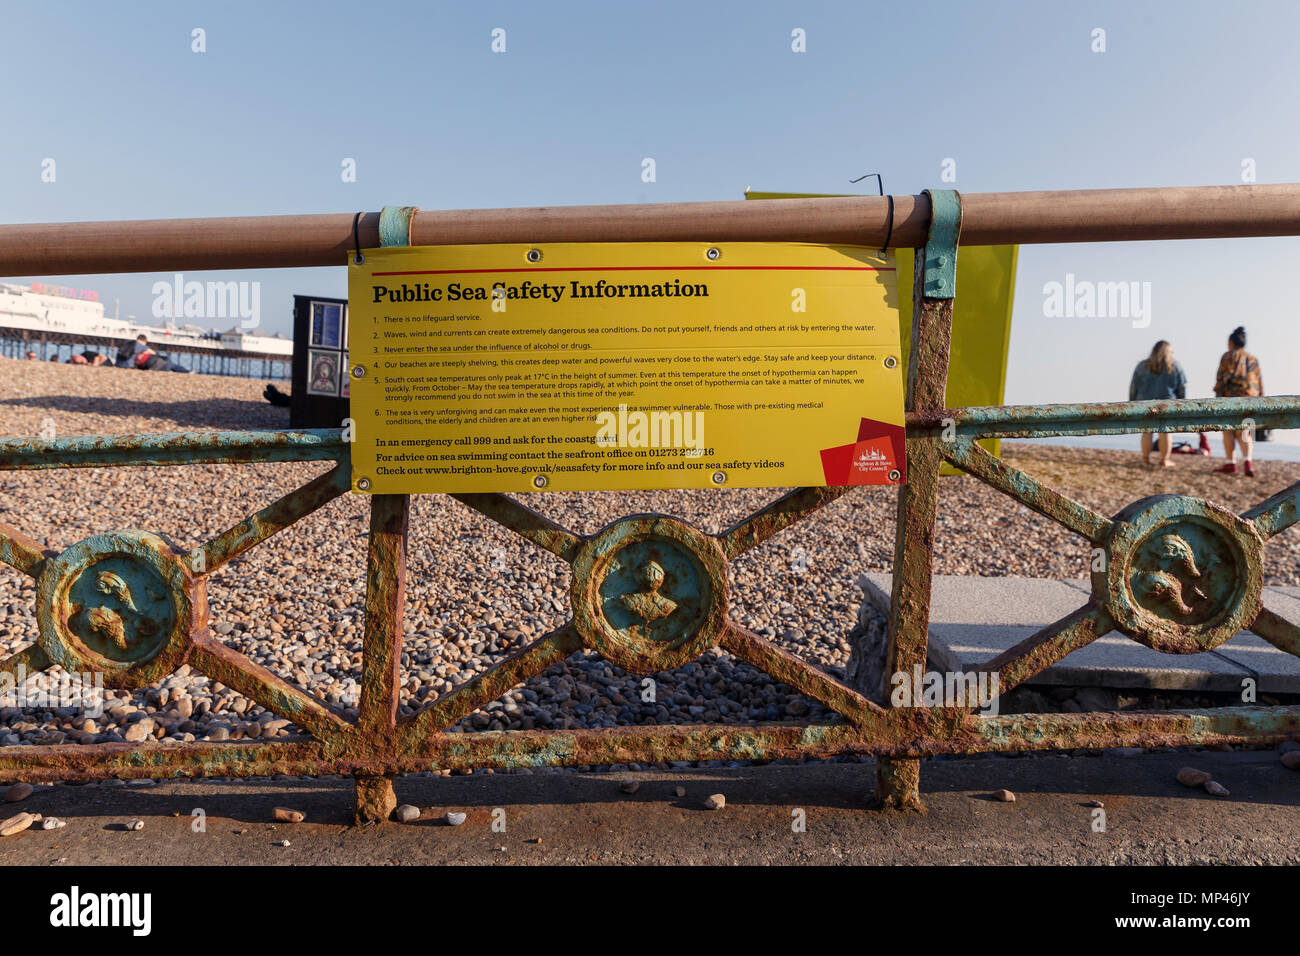 Public Sea Safety Information displayed on Brighton beach. Stock Photo